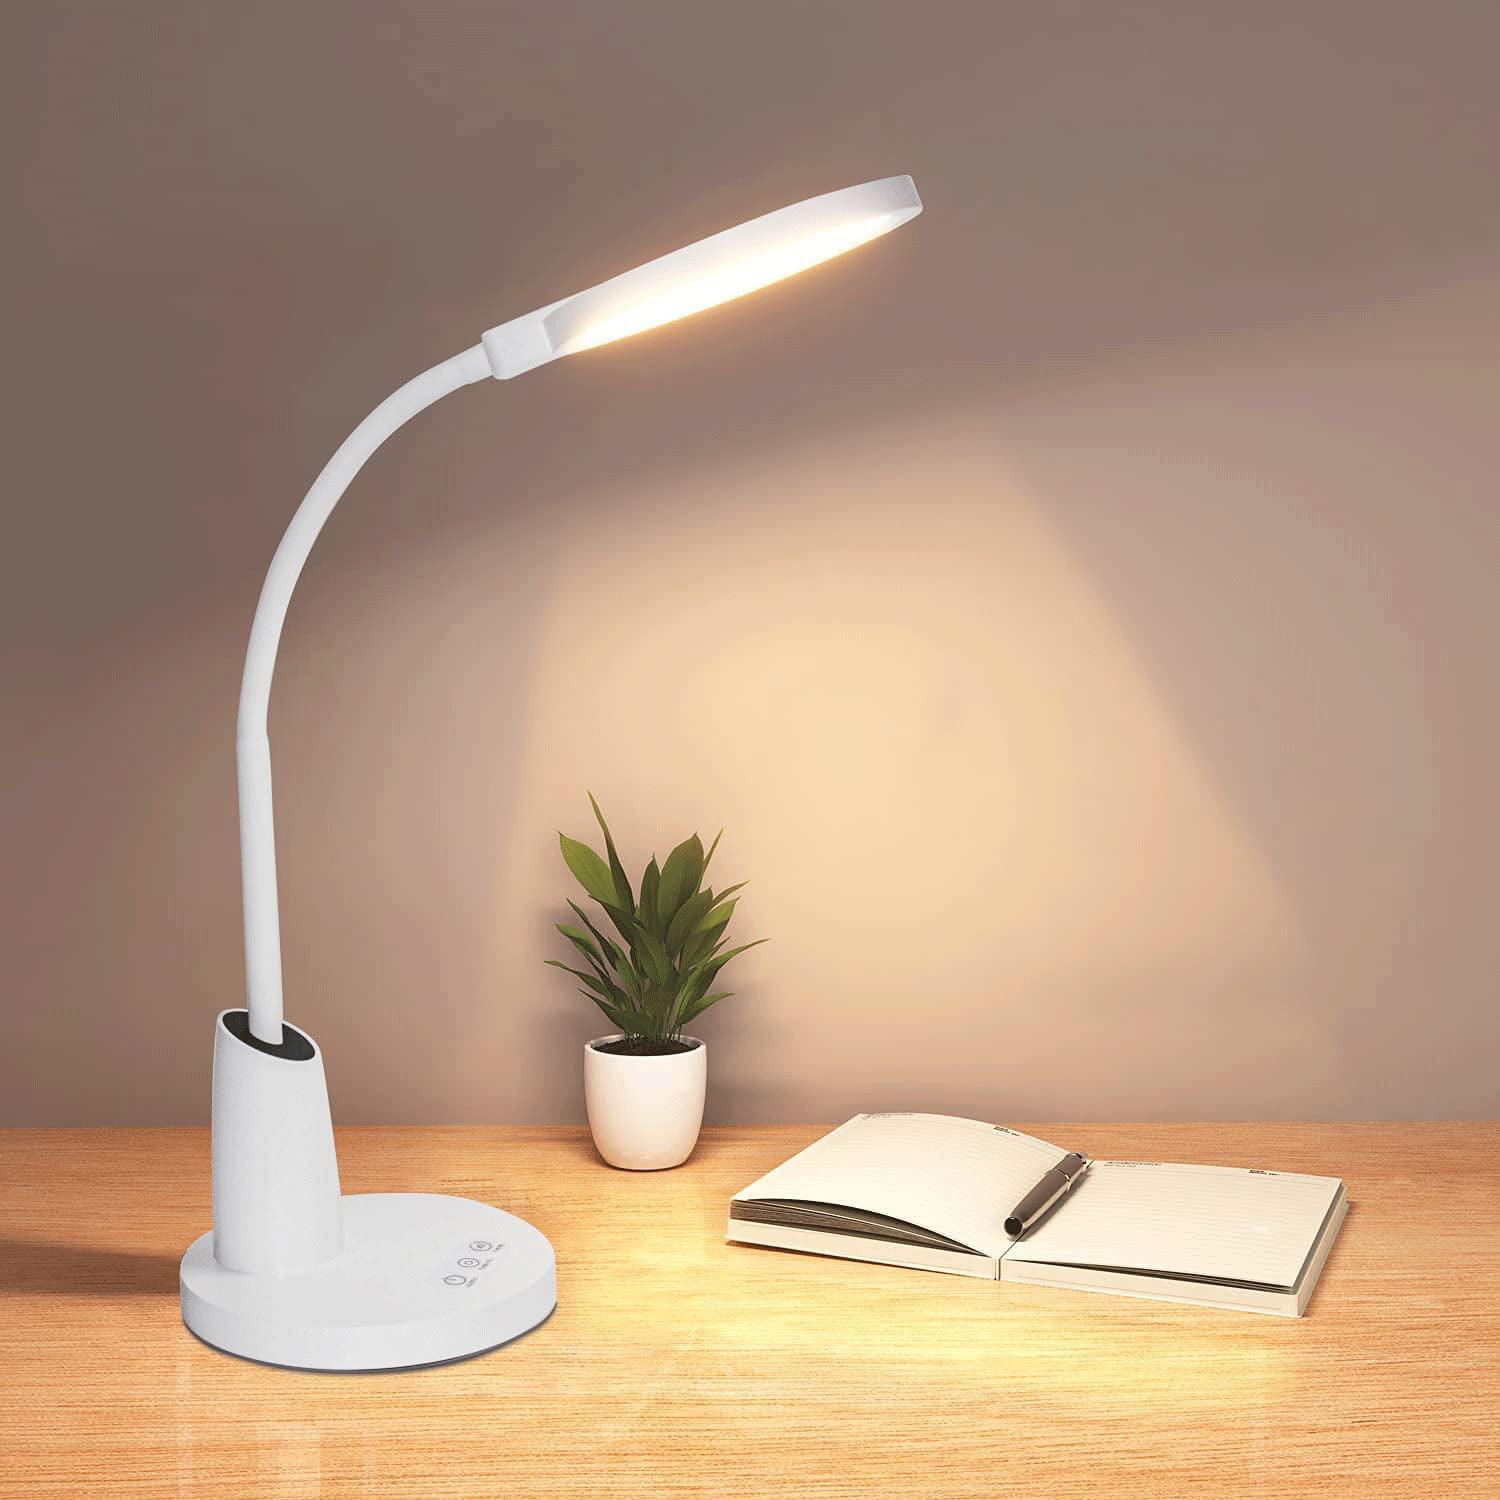 Sunbeam LED Desk Lamp Night Lights Home Decor Lighting Office Supplies NEW 